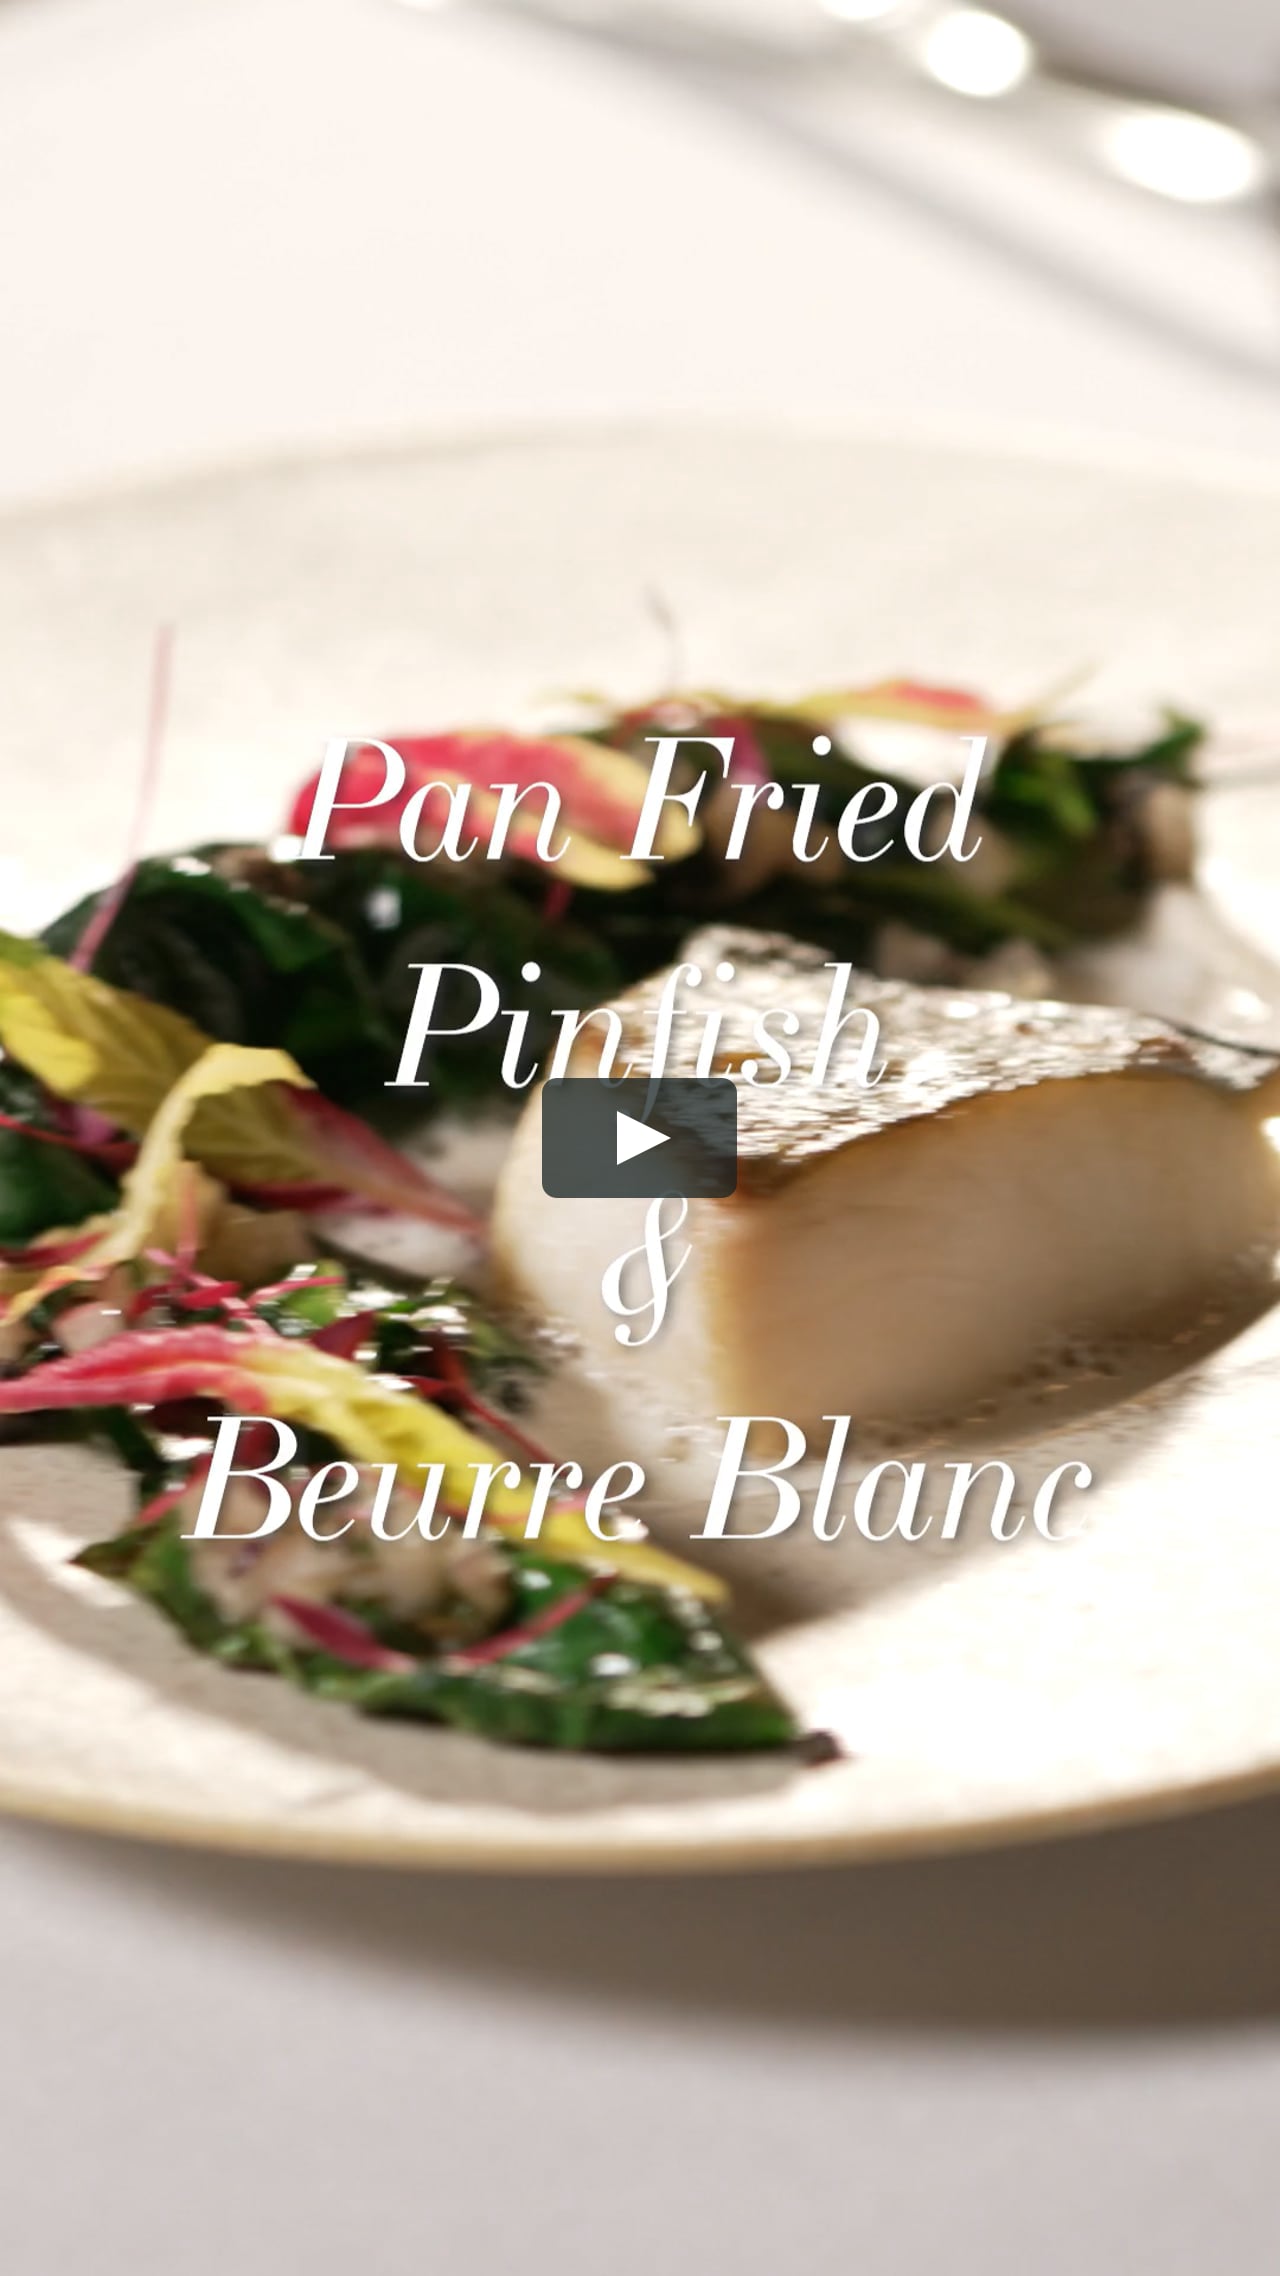 Pan Fried Pinfish & Beurre Blanc on Vimeo